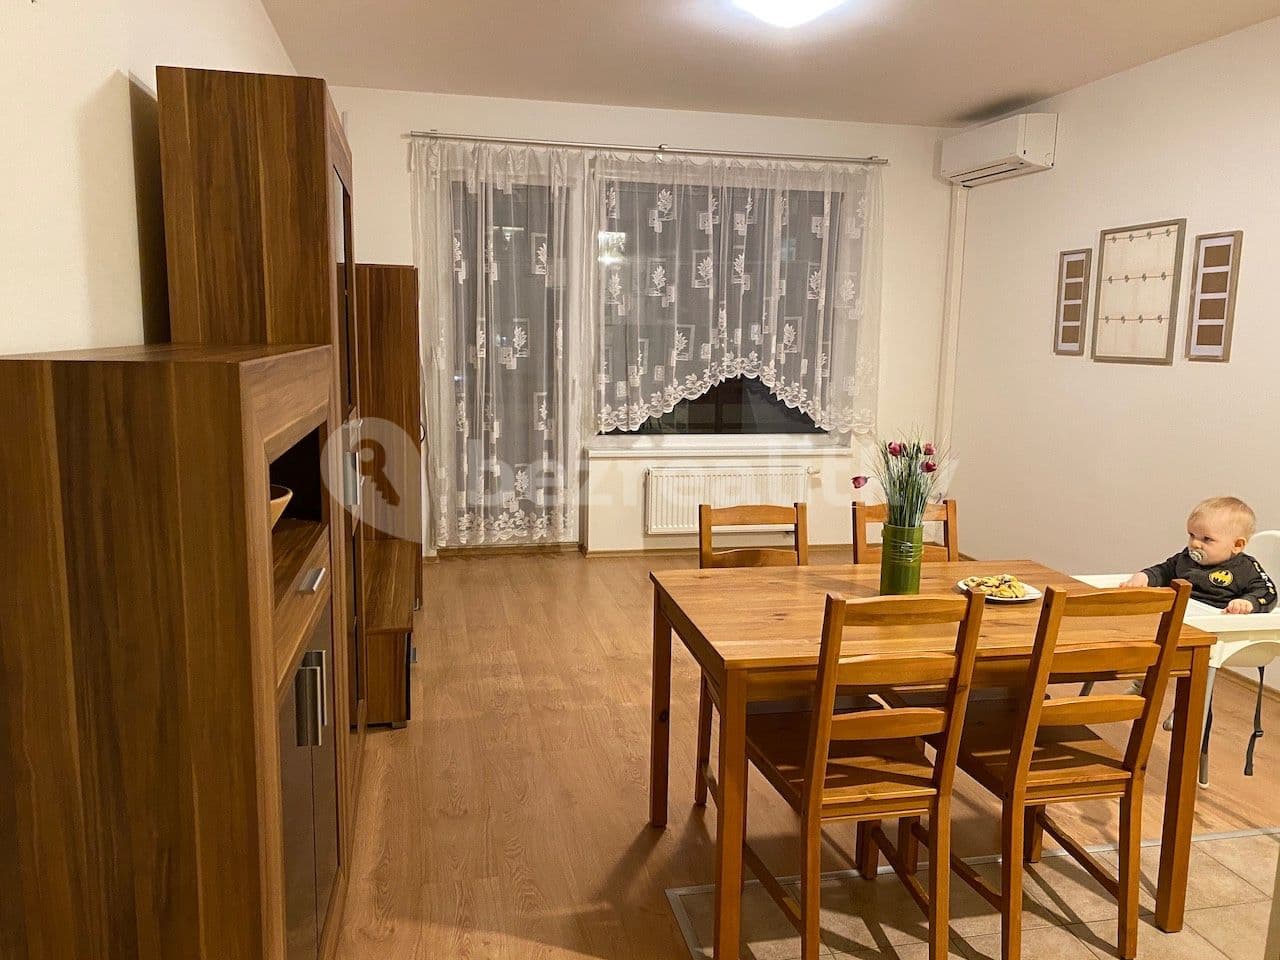 1 bedroom with open-plan kitchen flat for sale, 45 m², Hornoměcholupská, Prague, Prague